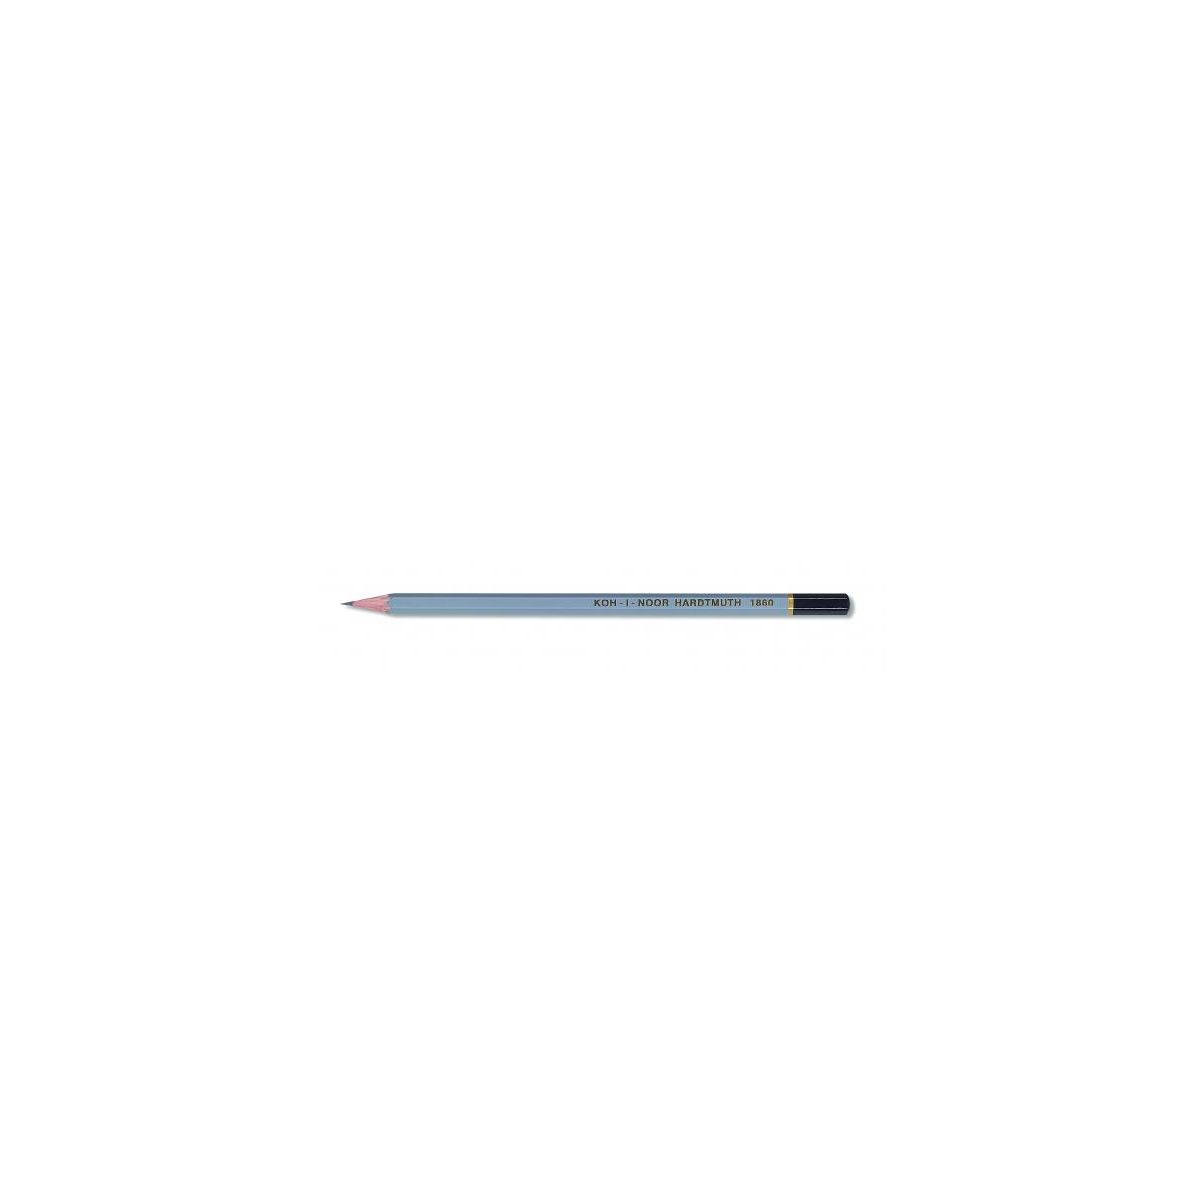 Ołówek Koh-I-Noor 1860 4B